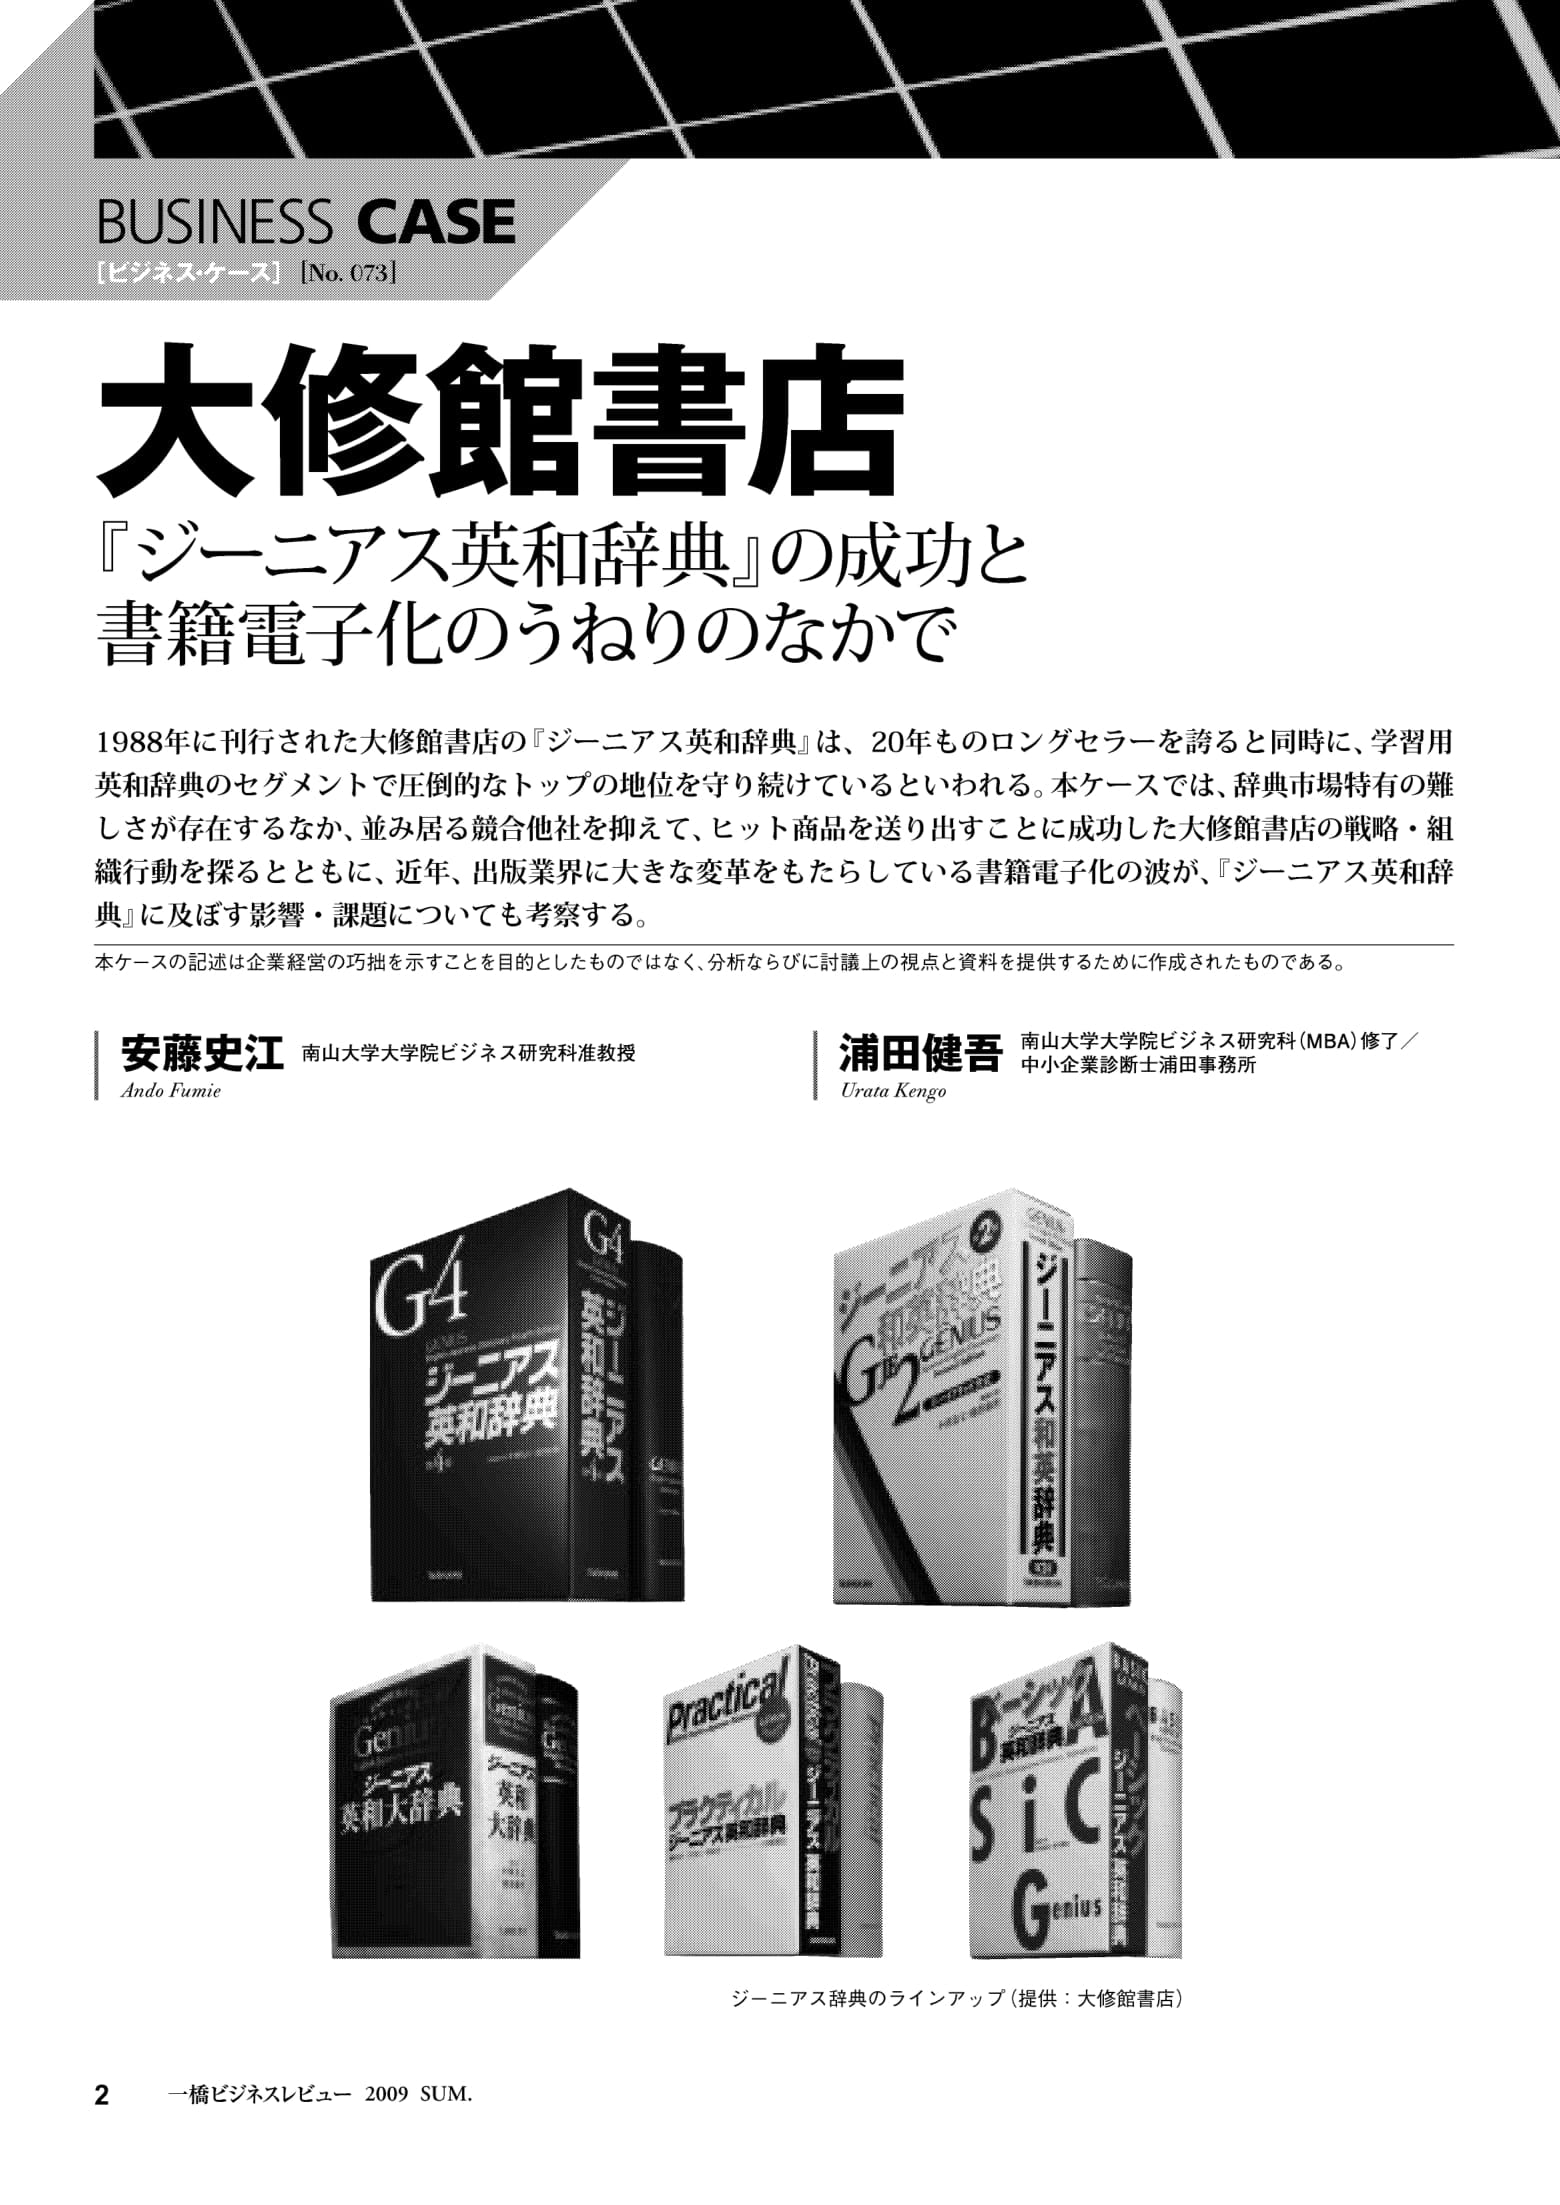 –　Business　大修館書店　Review　『ジーニアス英和辞典』の成功と書籍電子化のうねりのなかで　Hitotsubashi